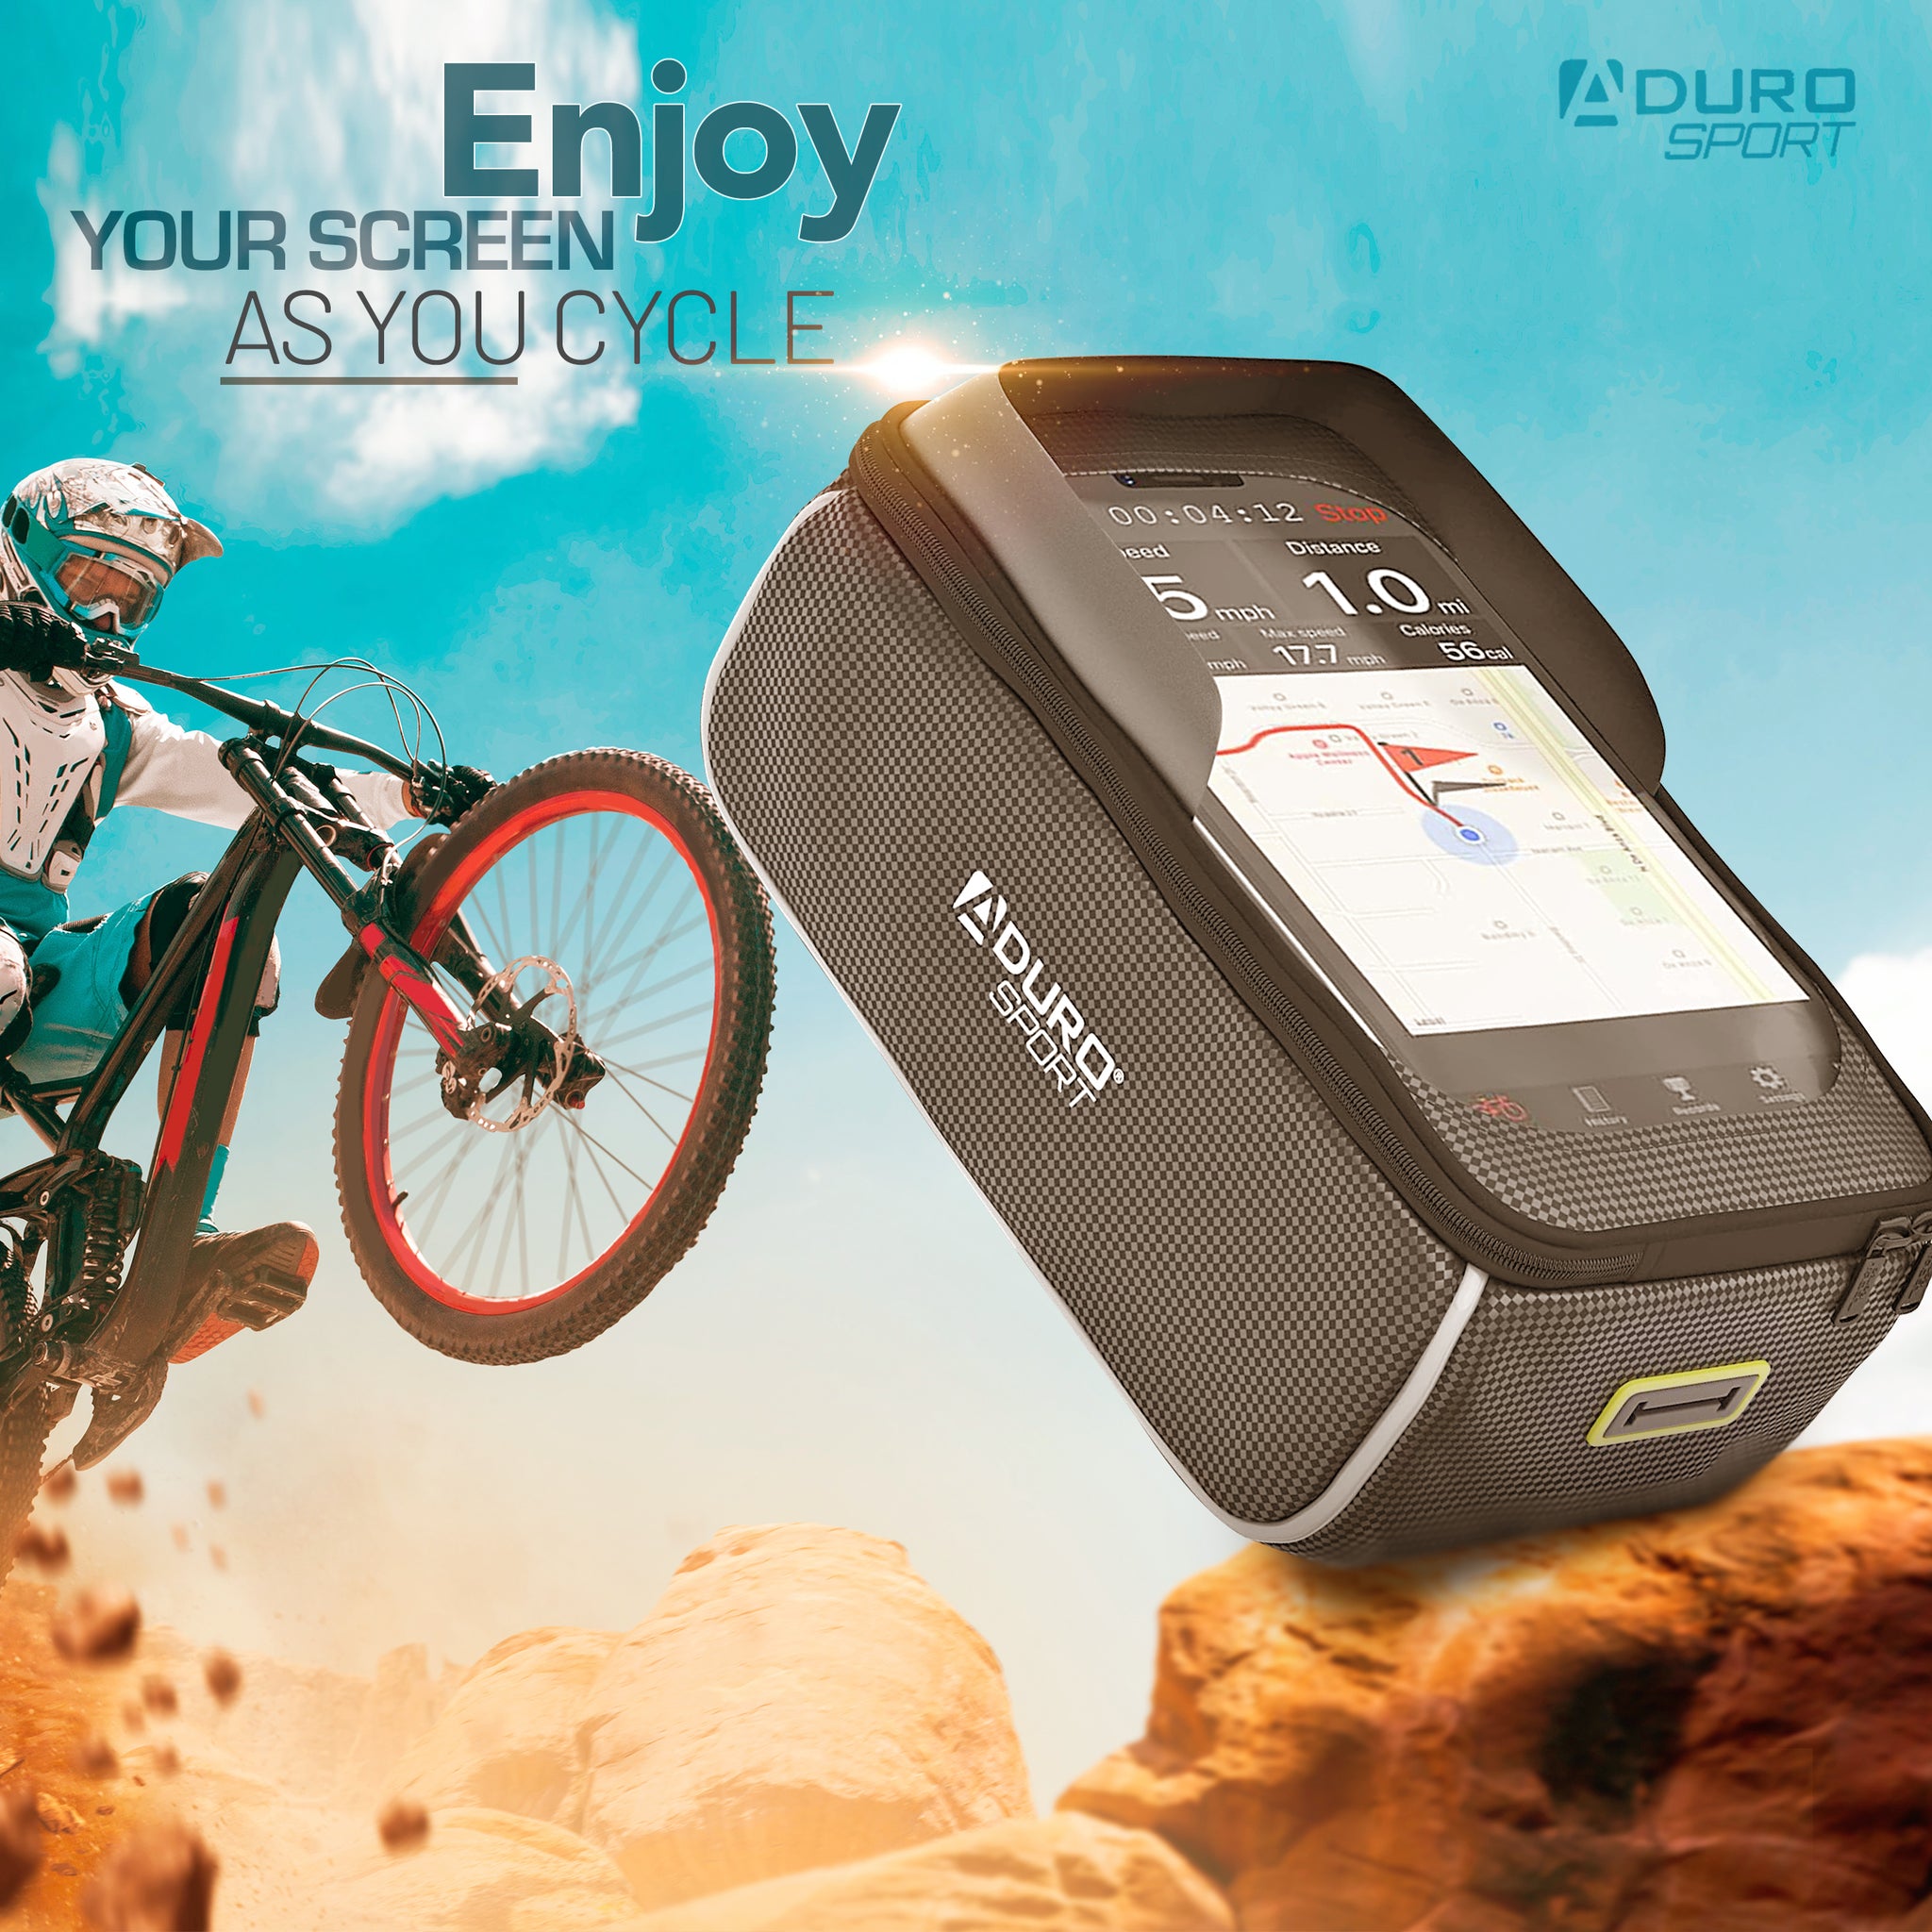  Aduro Sport Bicycle Phone Holder Pack, XL Bike Bag